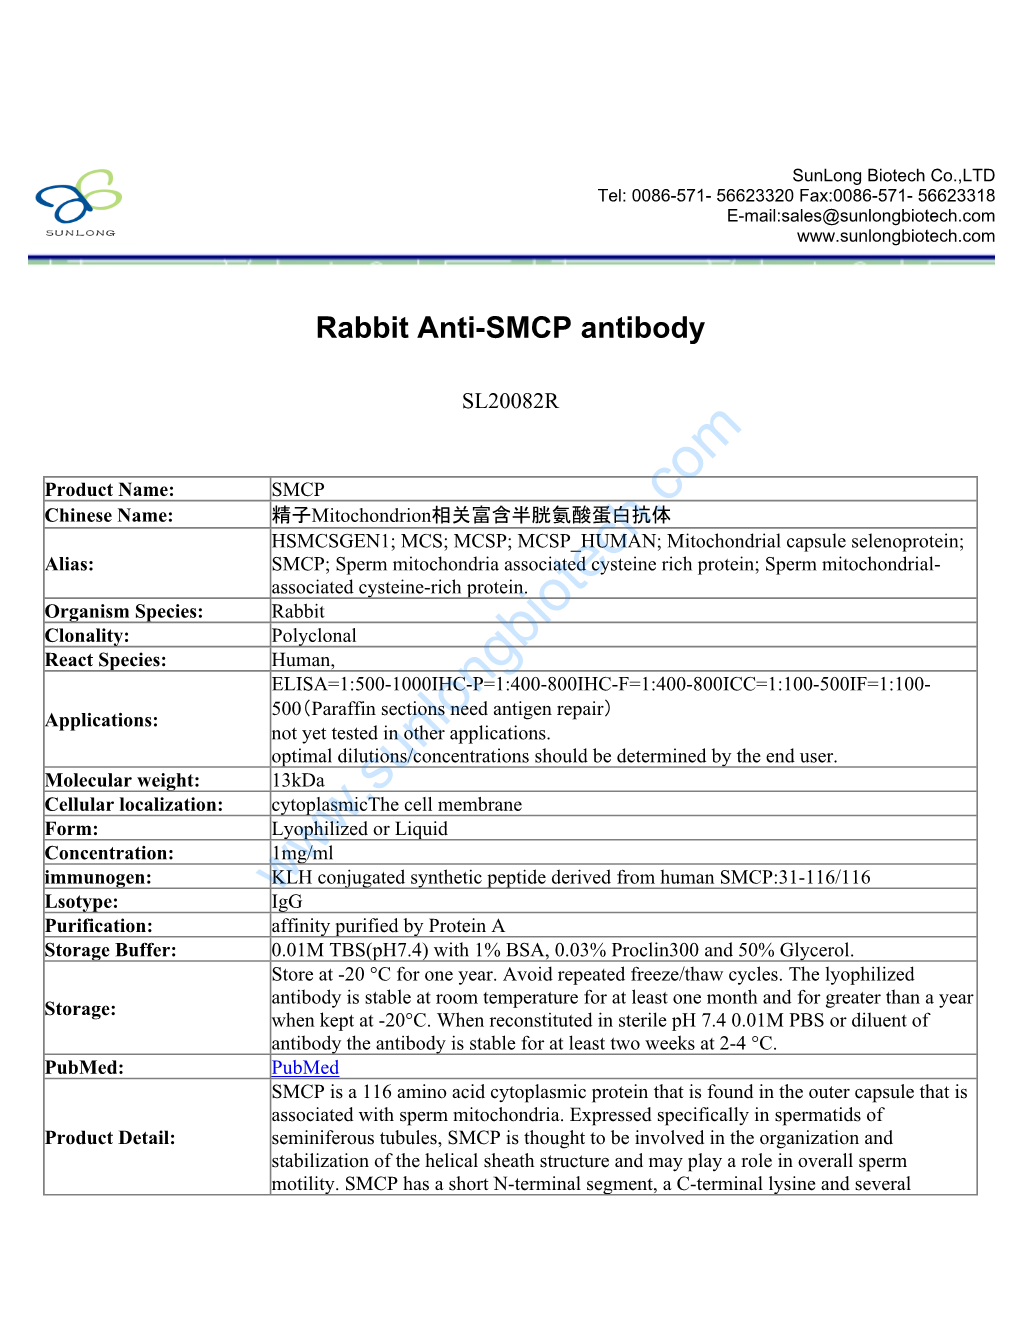 Rabbit Anti-SMCP Antibody-SL20082R